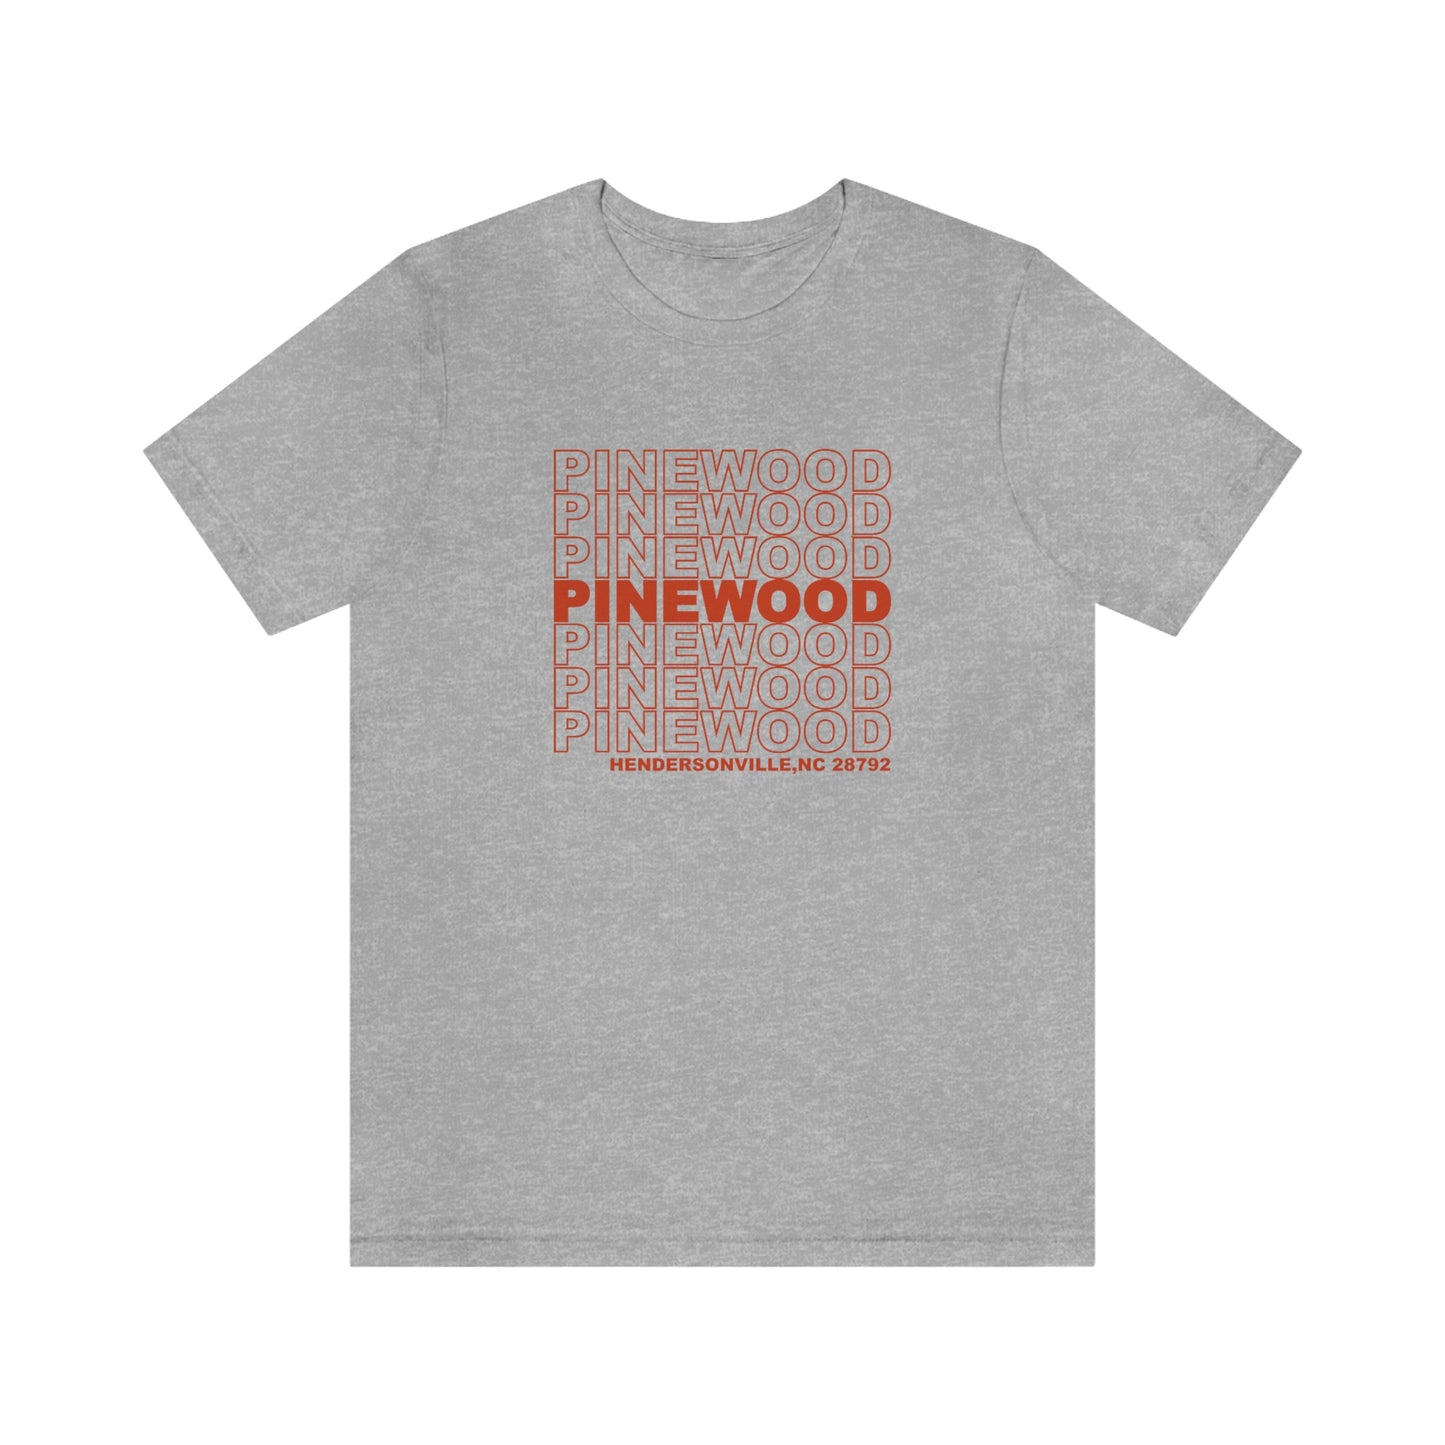 Pinewood Pinewood Pinewood  Adult SS Tee (multiple colors)